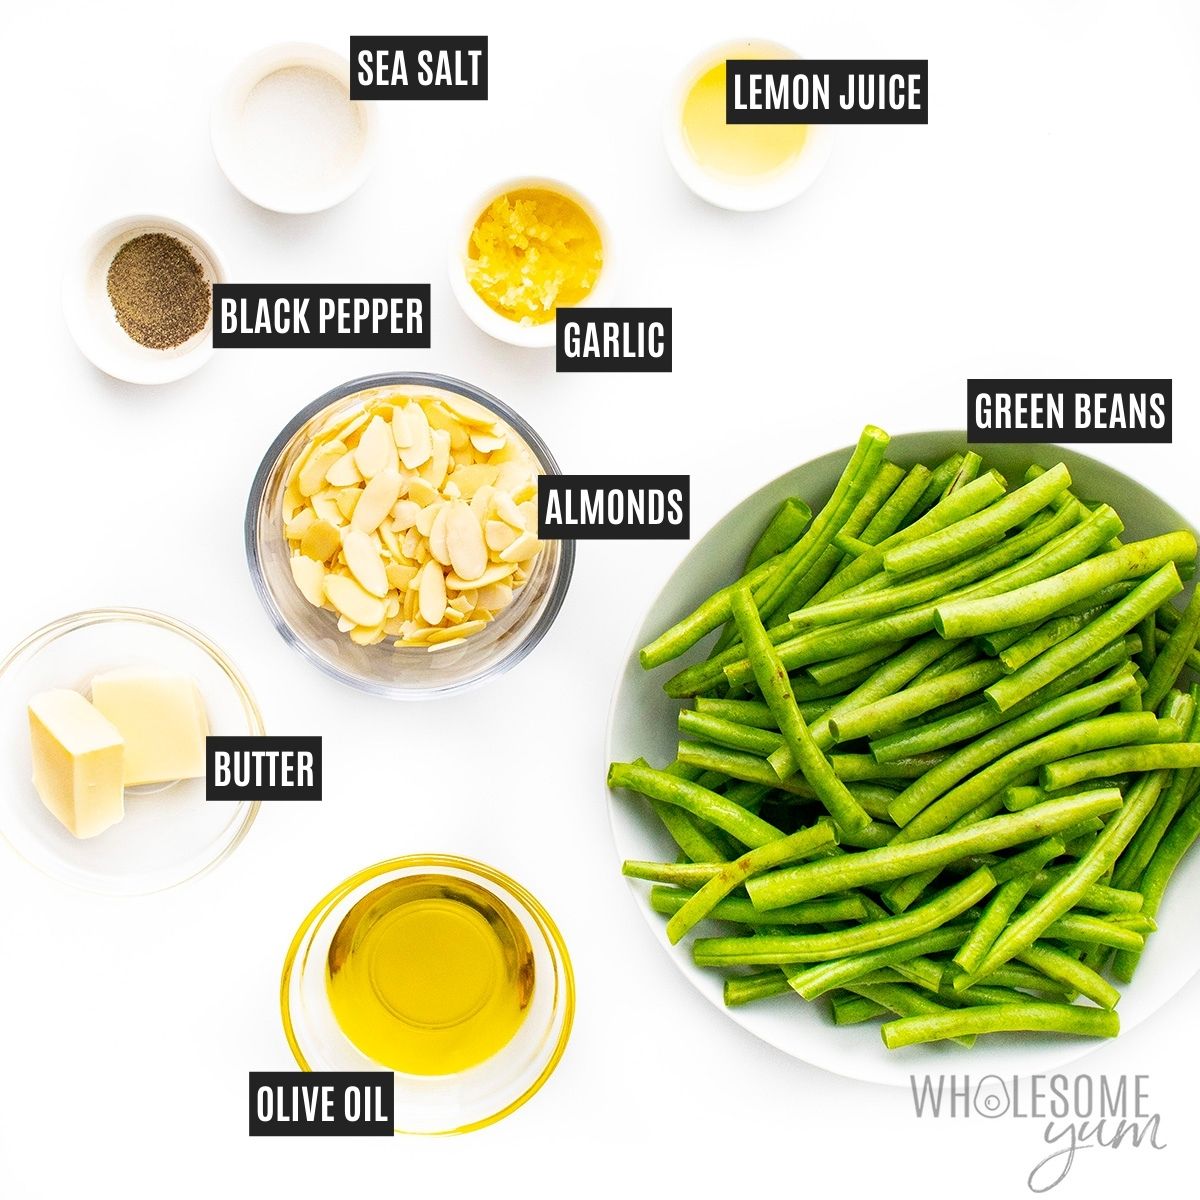 Green bean almondine recipe ingredients.